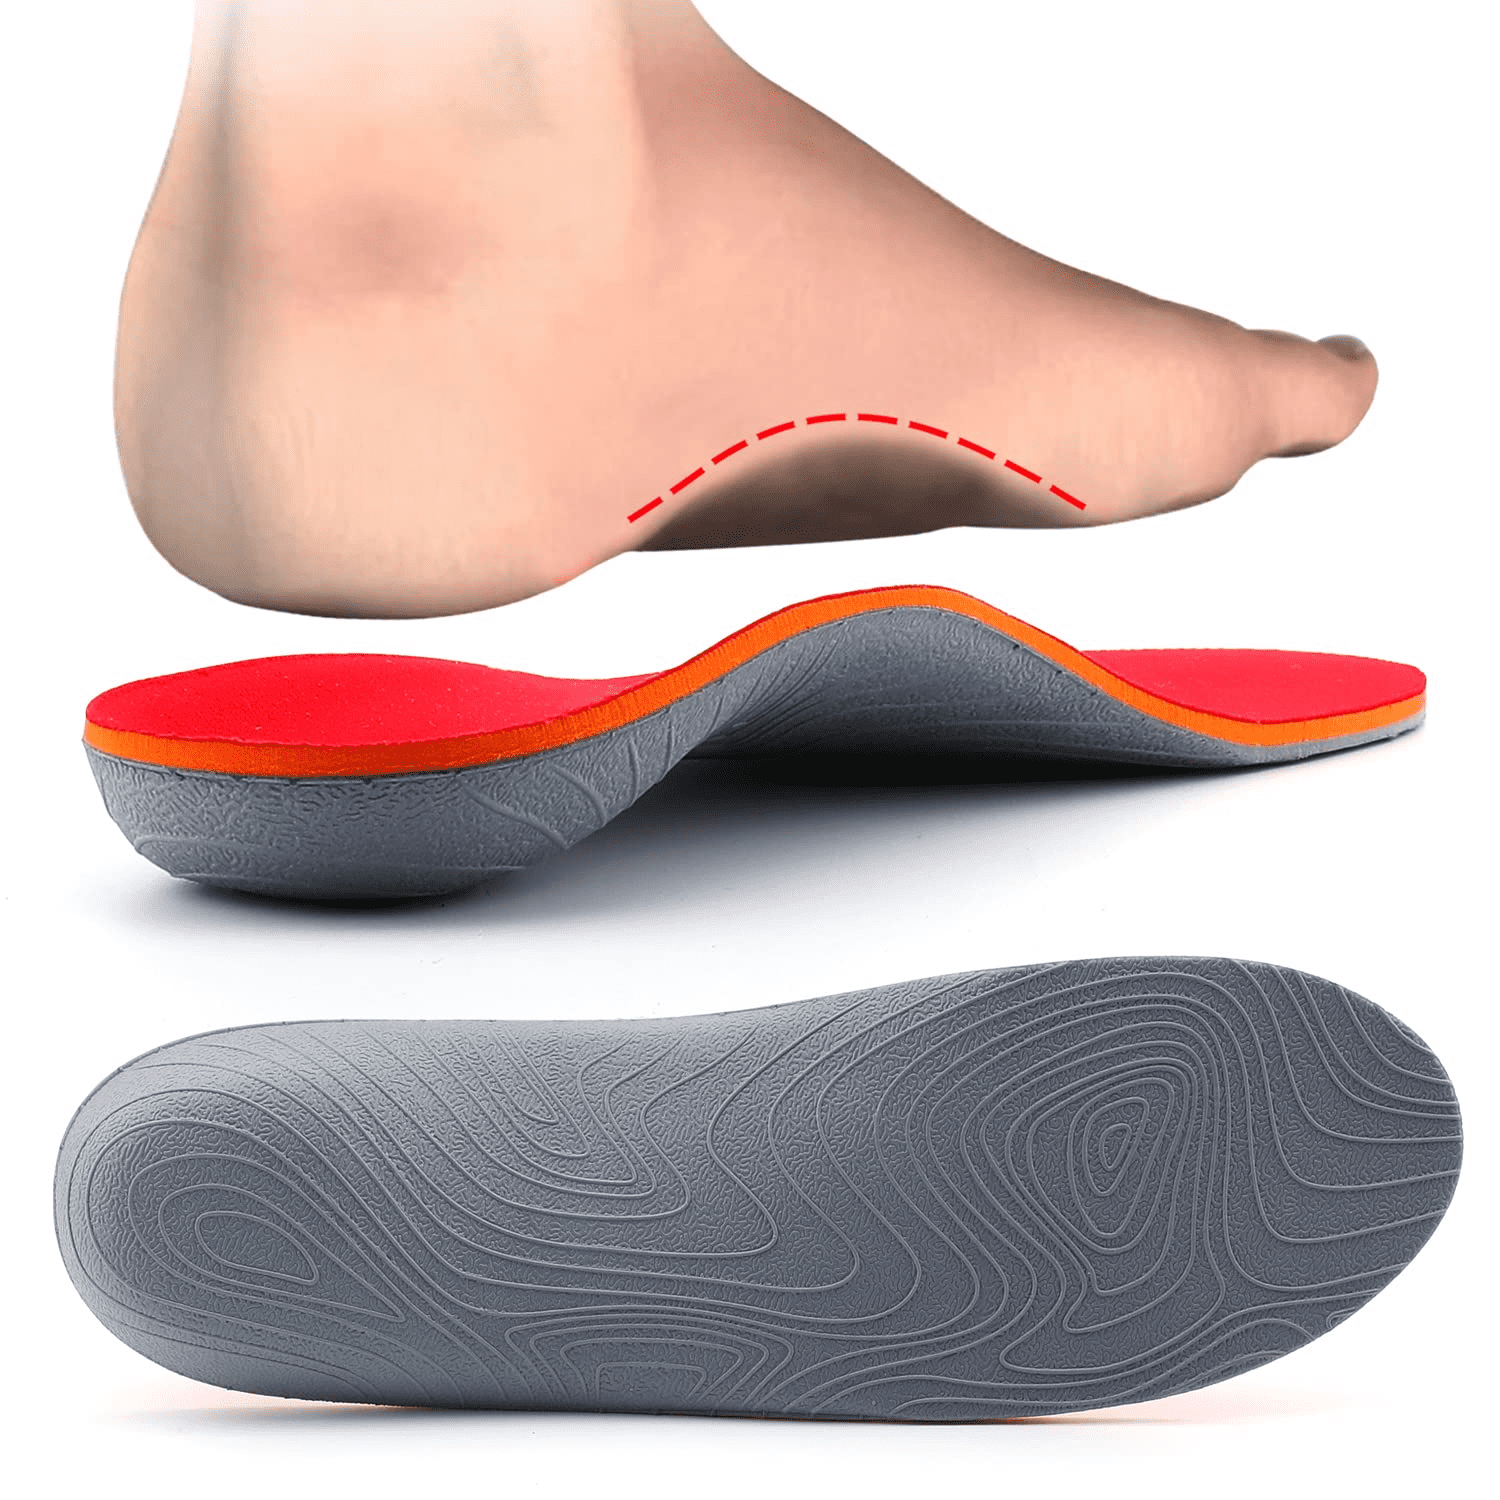 TOPSOLE Plantar Fasciitis Insoles High Arch Support Shoe Inserts Pain Relief Orthotics Flat Feet Metatarsalgia Overpronation Work Boot Men Women Stan 2f3e3ac8 82a3 4e56 82d4 8945083ab758.9c8e8d33e93bc66167247ed08f11ba9f